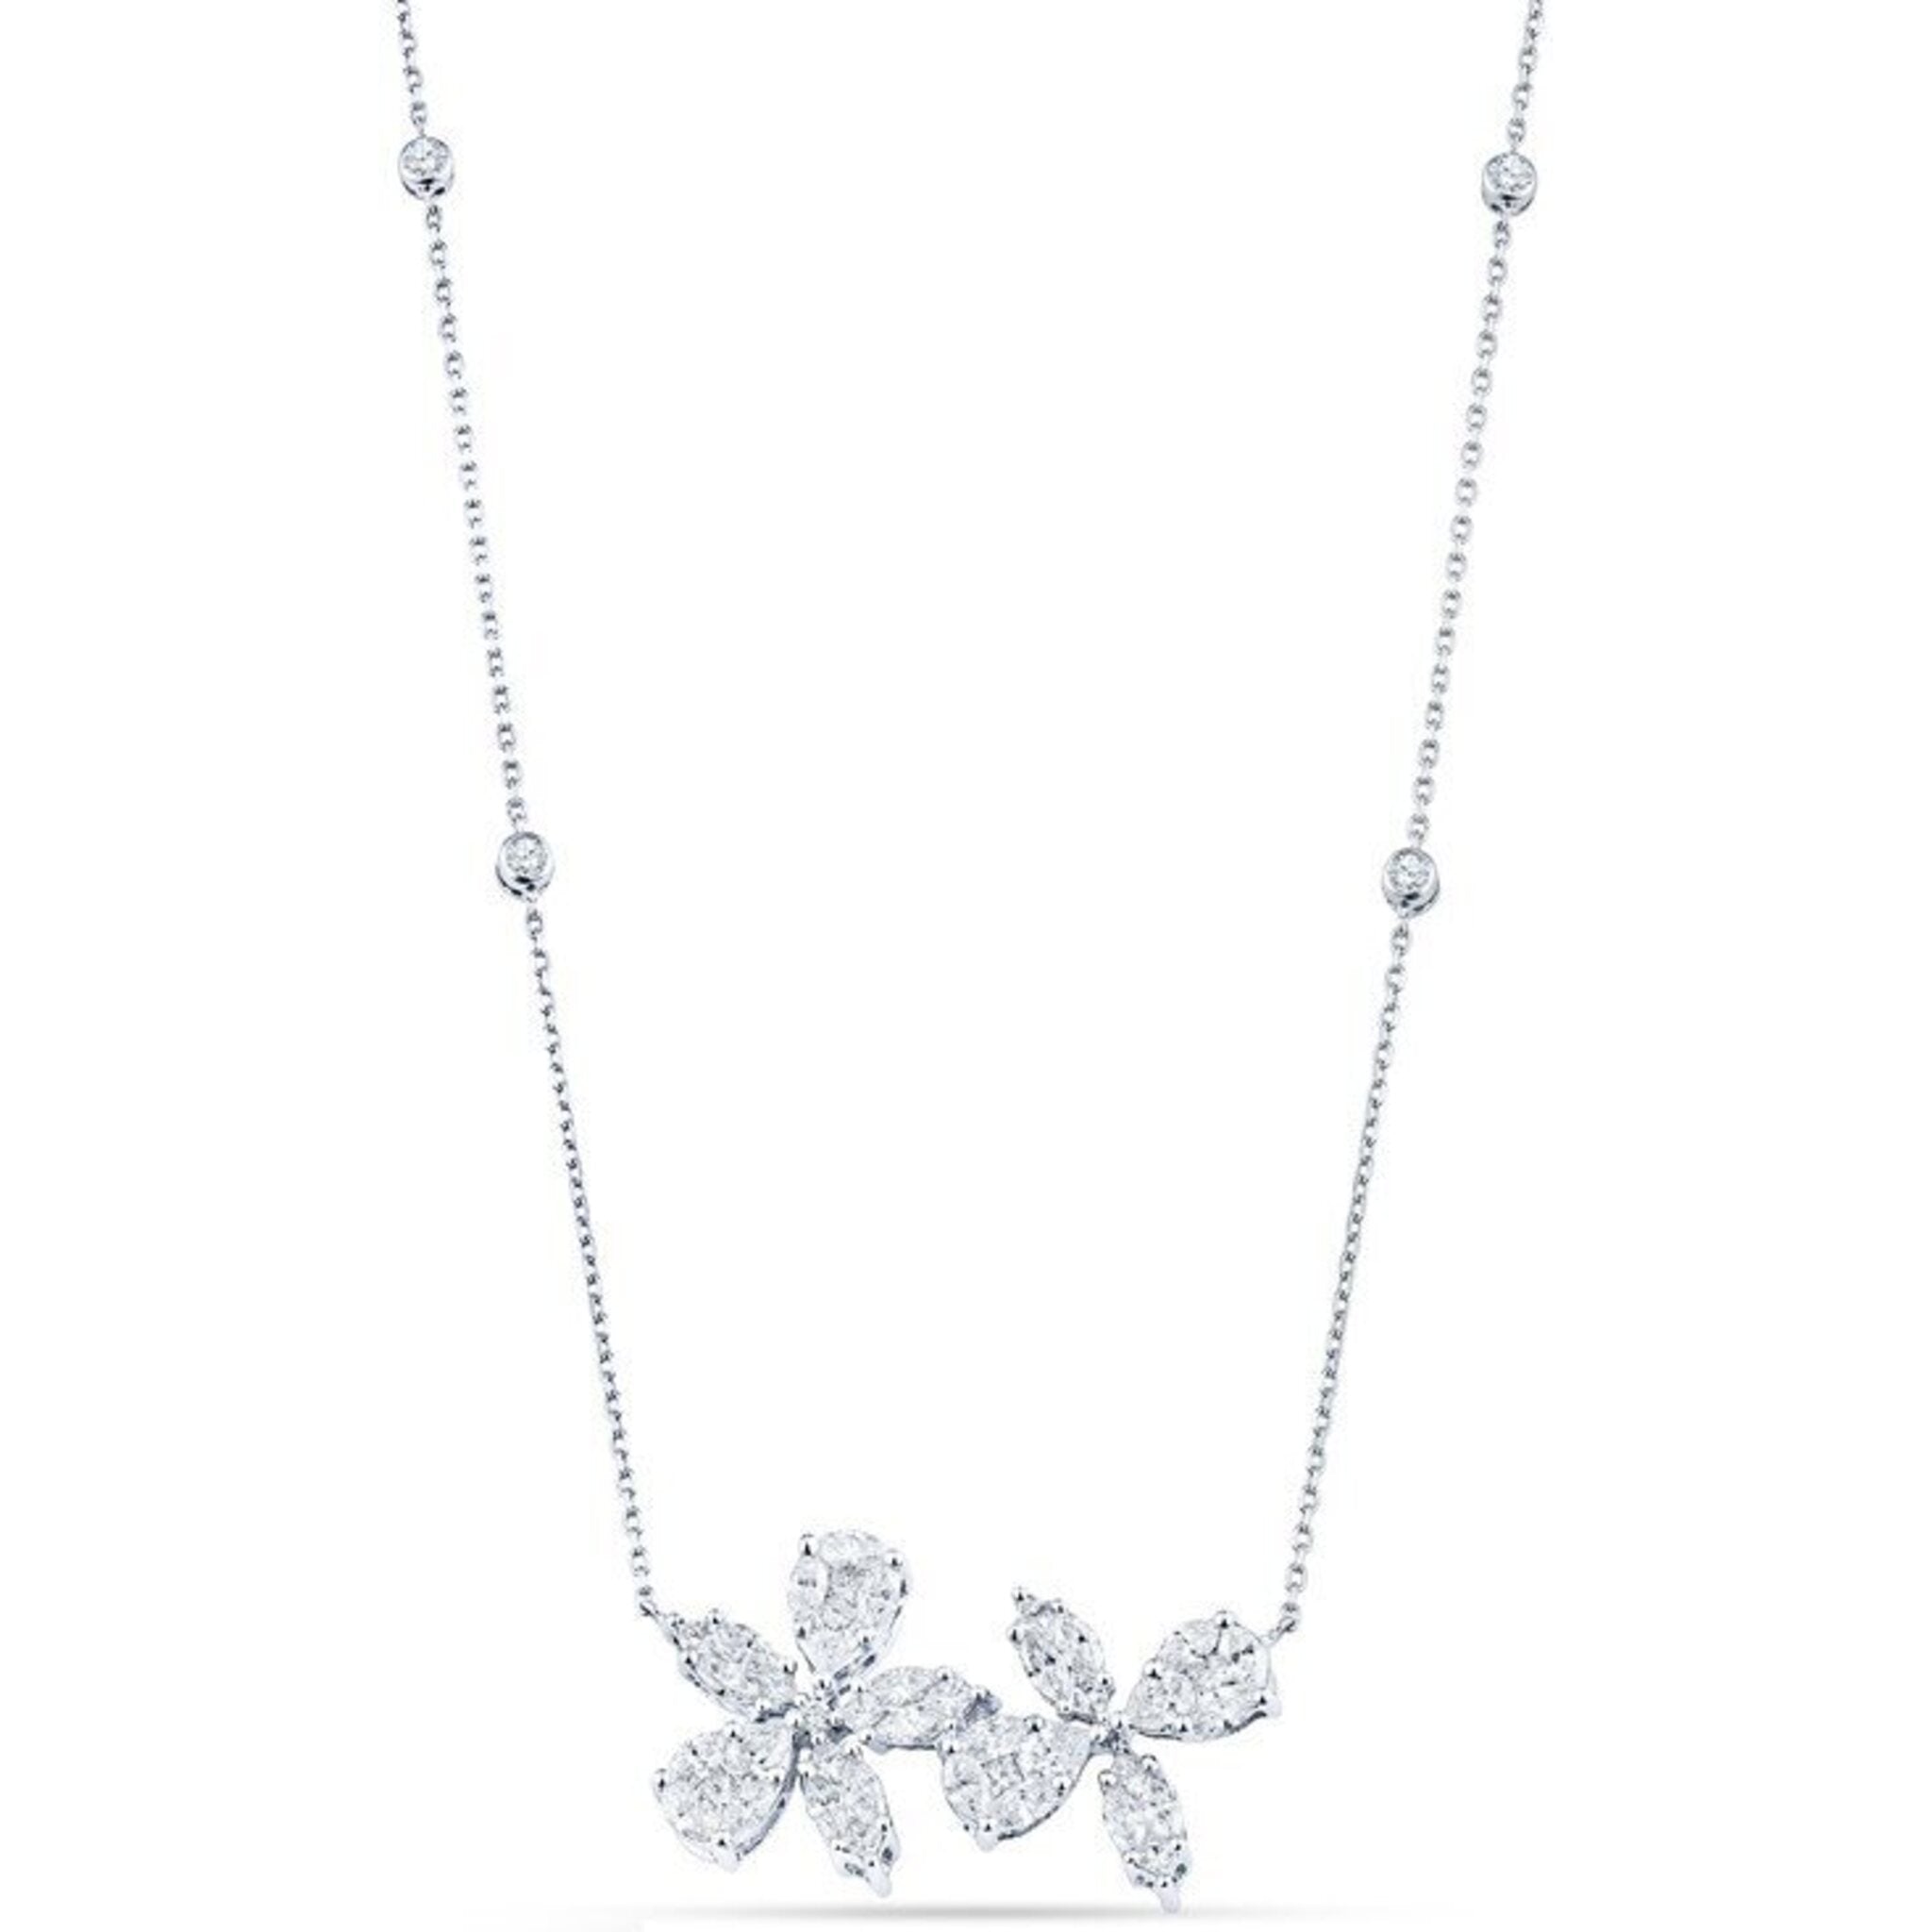 Double Flower 18kw Diamond Necklace